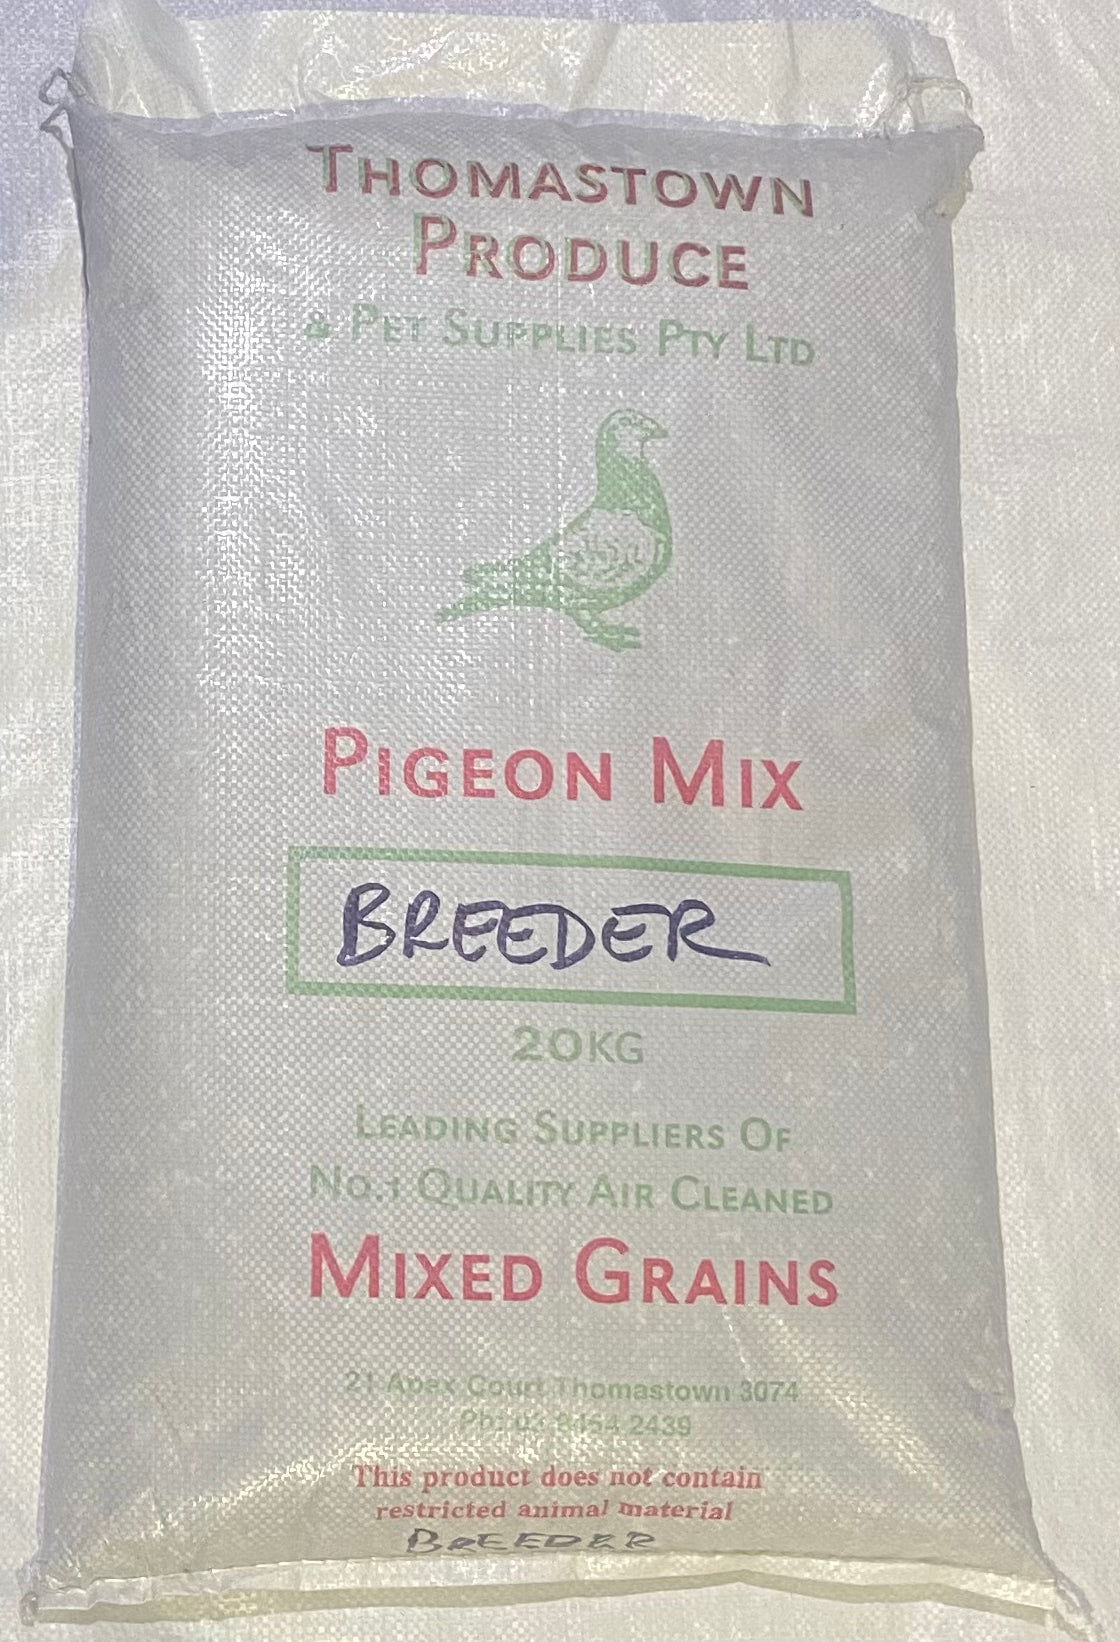 Pigeon Mix 20kg Breeder Thomastown - Woonona Petfood & Produce